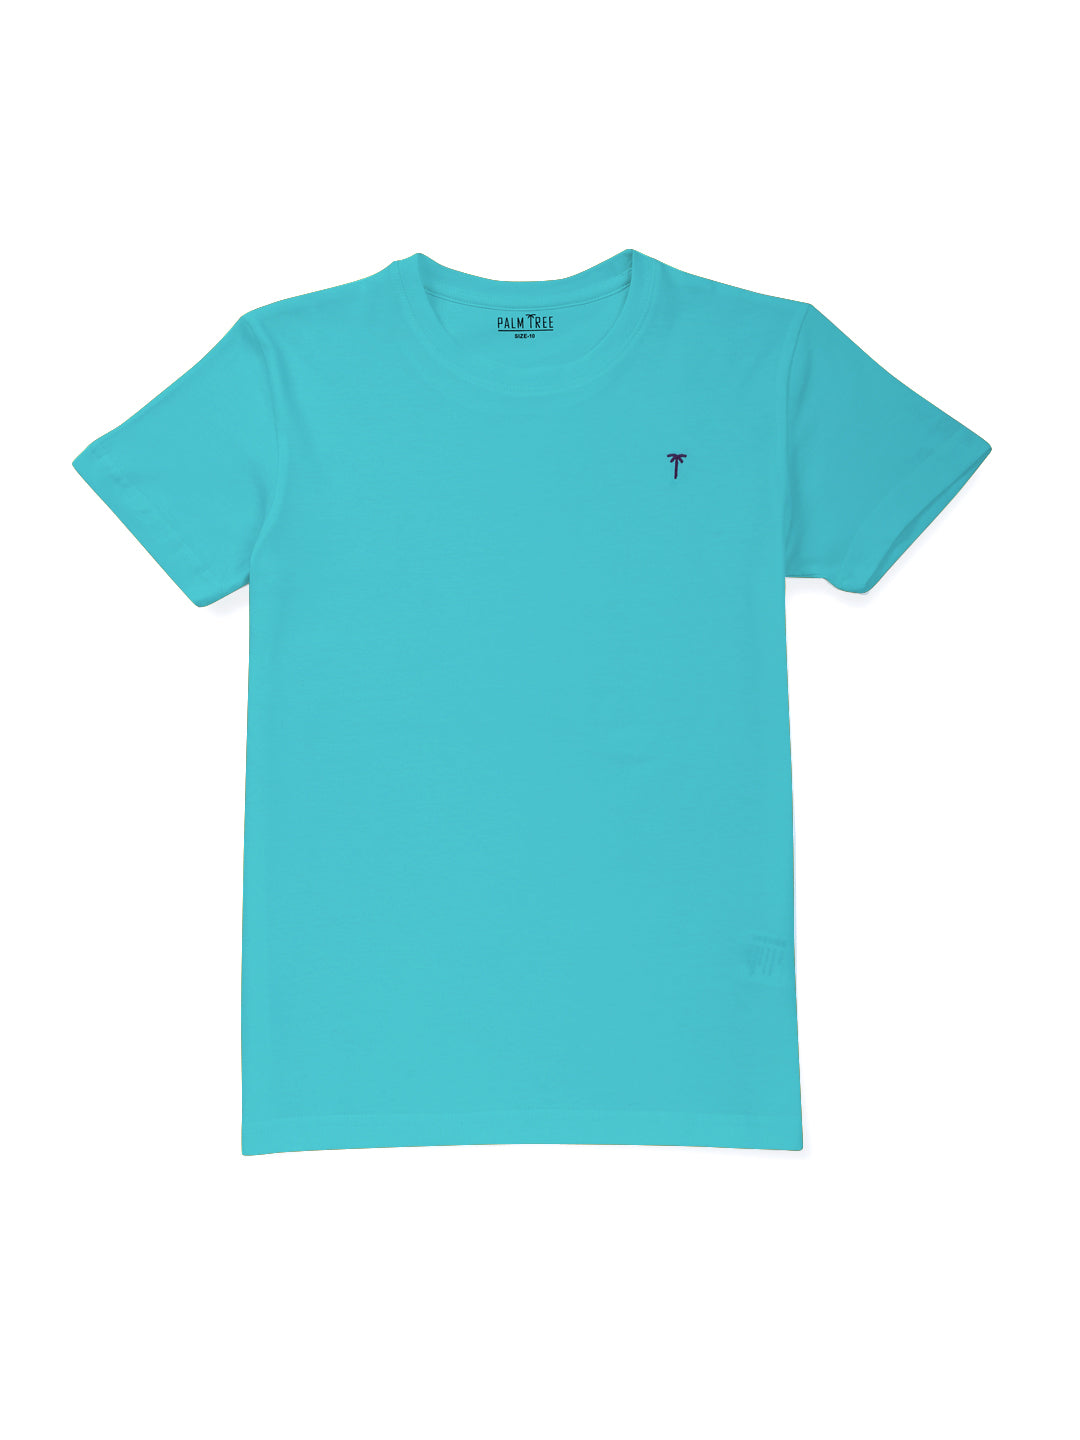 Boys Blue Solid Cotton T-Shirt